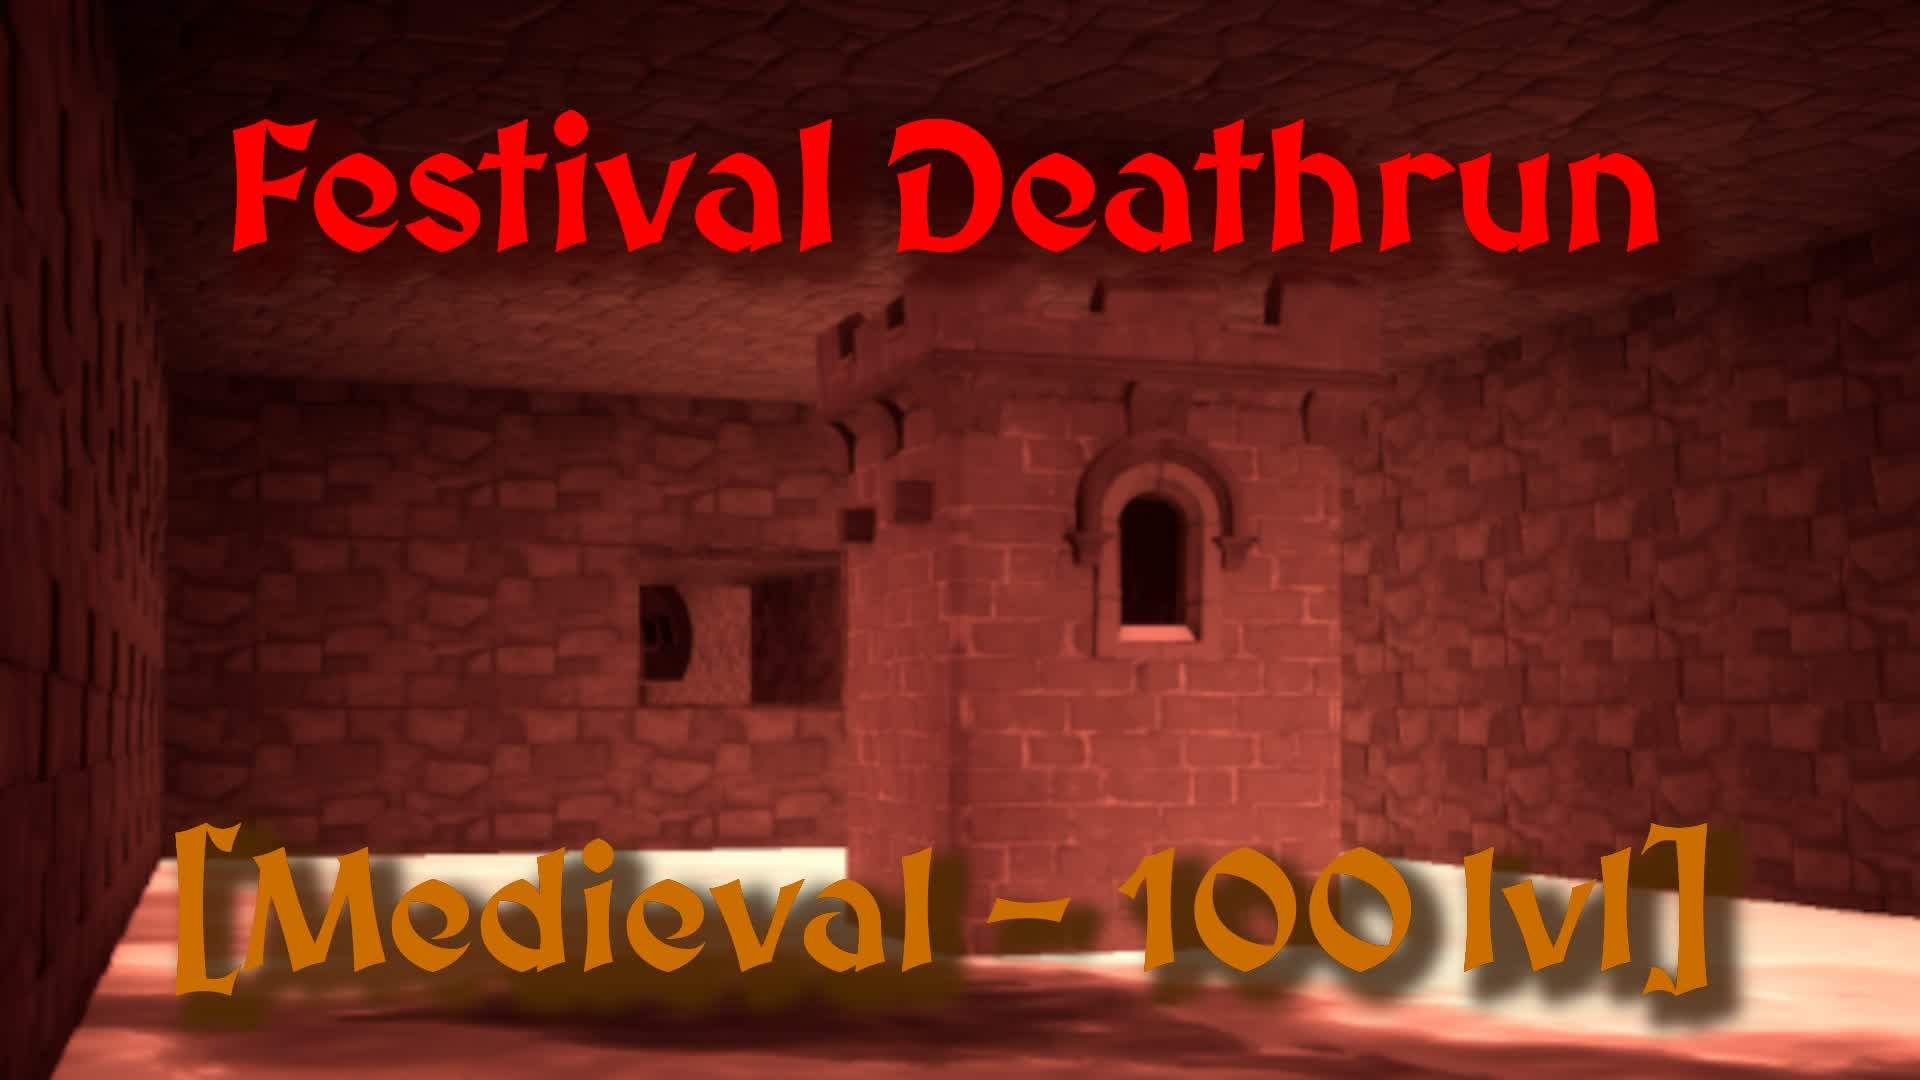 Festival Deathrun [Medieval - 100 lvl]